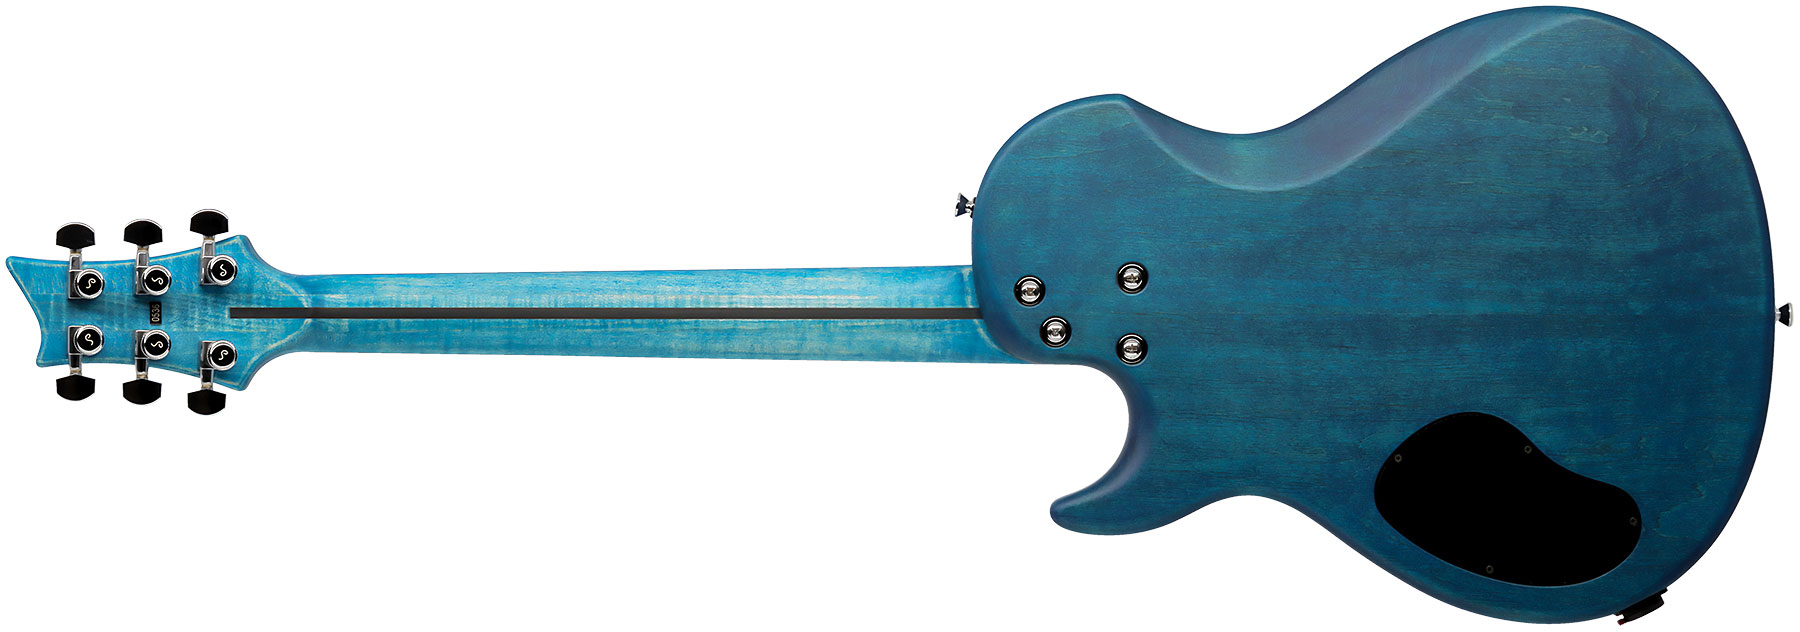 Vigier G.v. Wood 2h Ht Phe - Stonewash Blue Matt - Single cut electric guitar - Variation 1